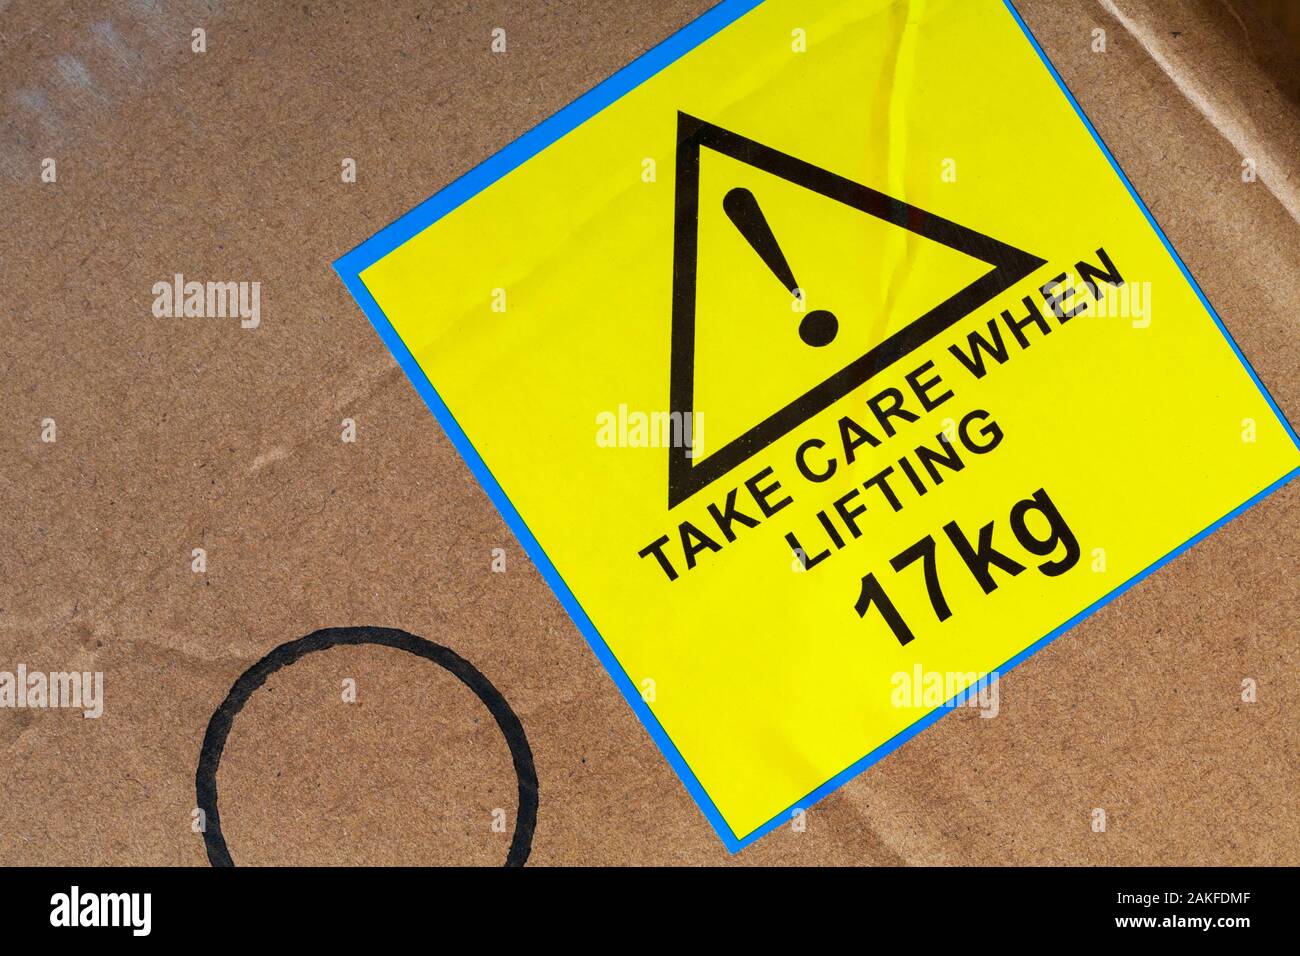 Take care when lifting 17kg yellow sticker label stuck on cardboard box Stock Photo